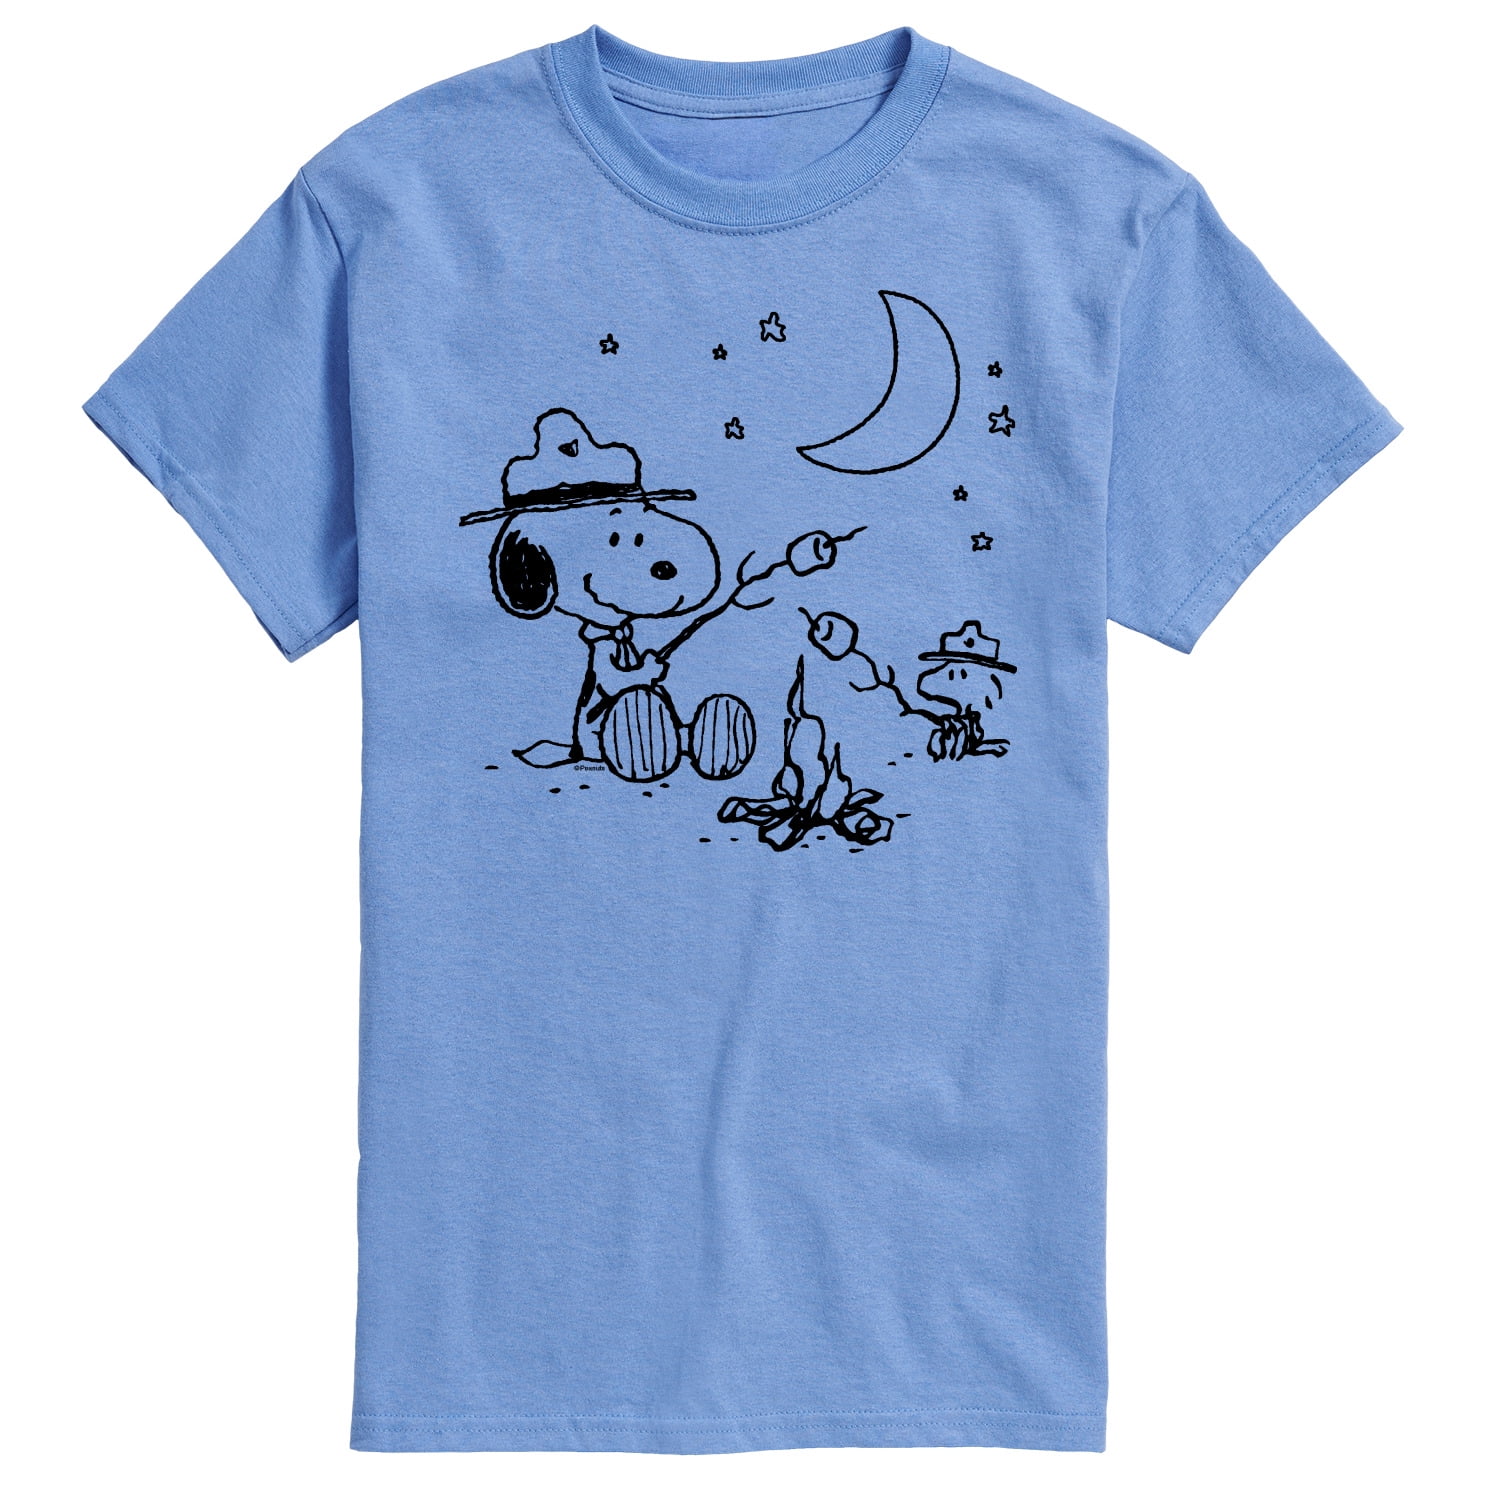 Peanuts - Snoopy Camping - Men's Short Sleeve Graphic T-Shirt - Walmart.com